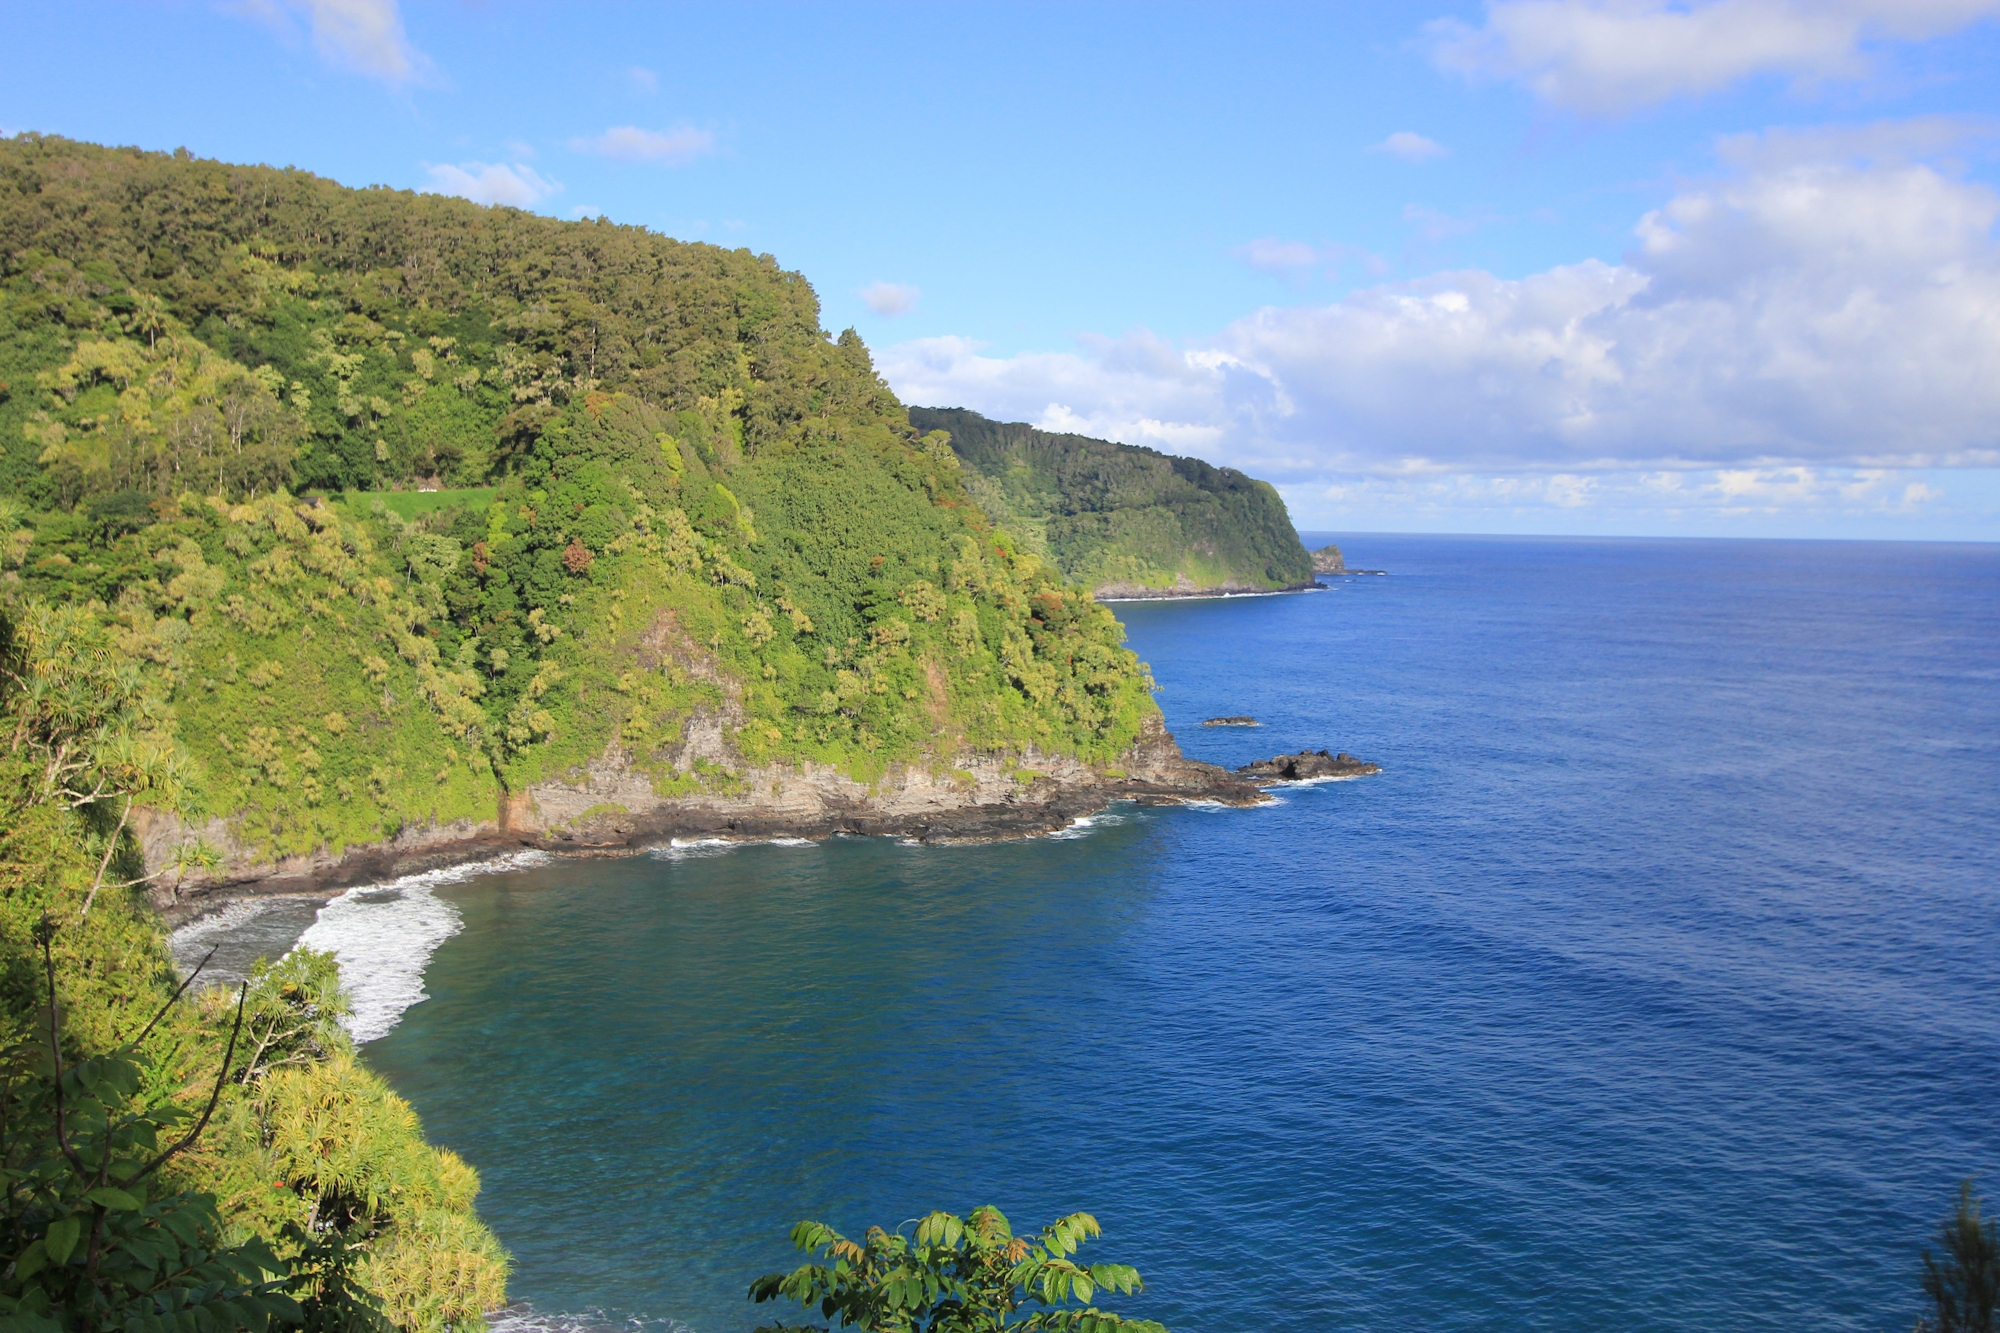 HTA - Hawaiian Tourism Authoirty